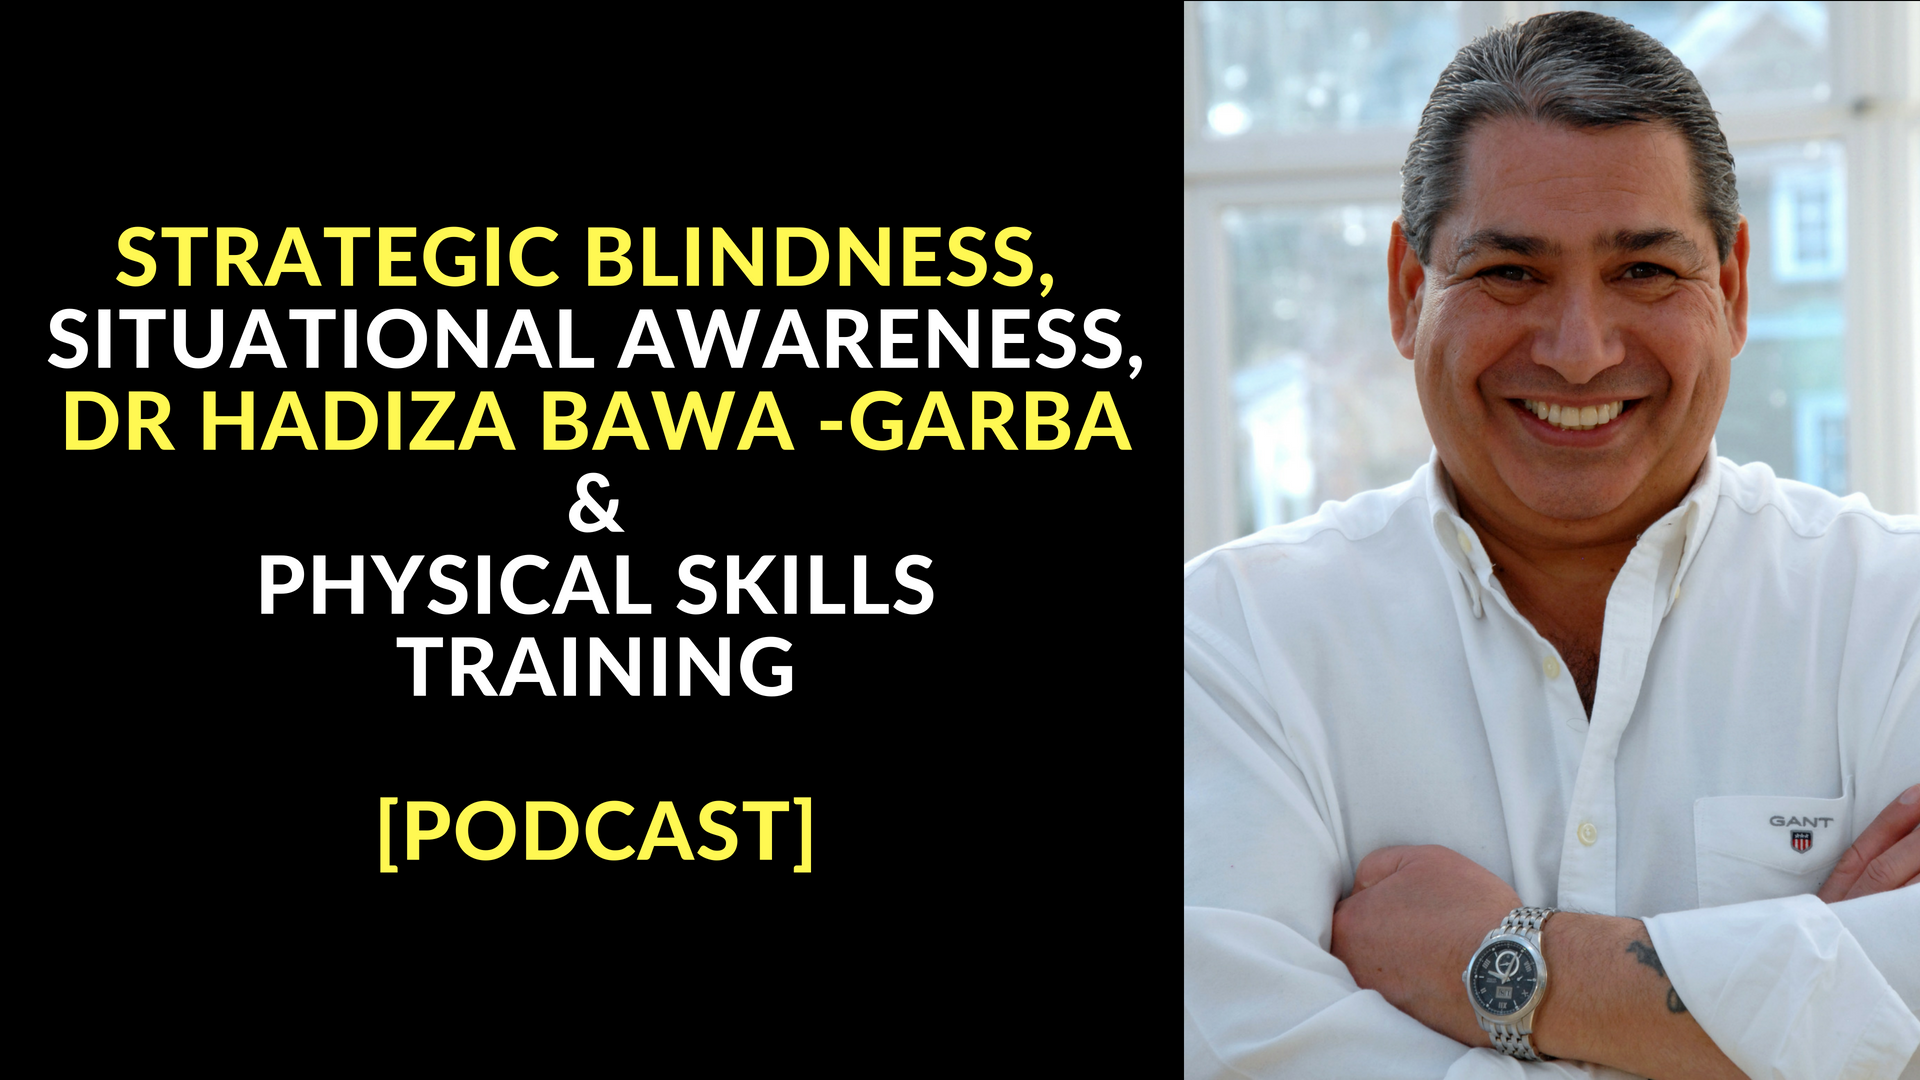 STRATEGIC BLINDNESS, SITUATIONAL AWARENSS, DR HADIZA BAWA -GARBA & PHYSICAL SKILLS TRAINING